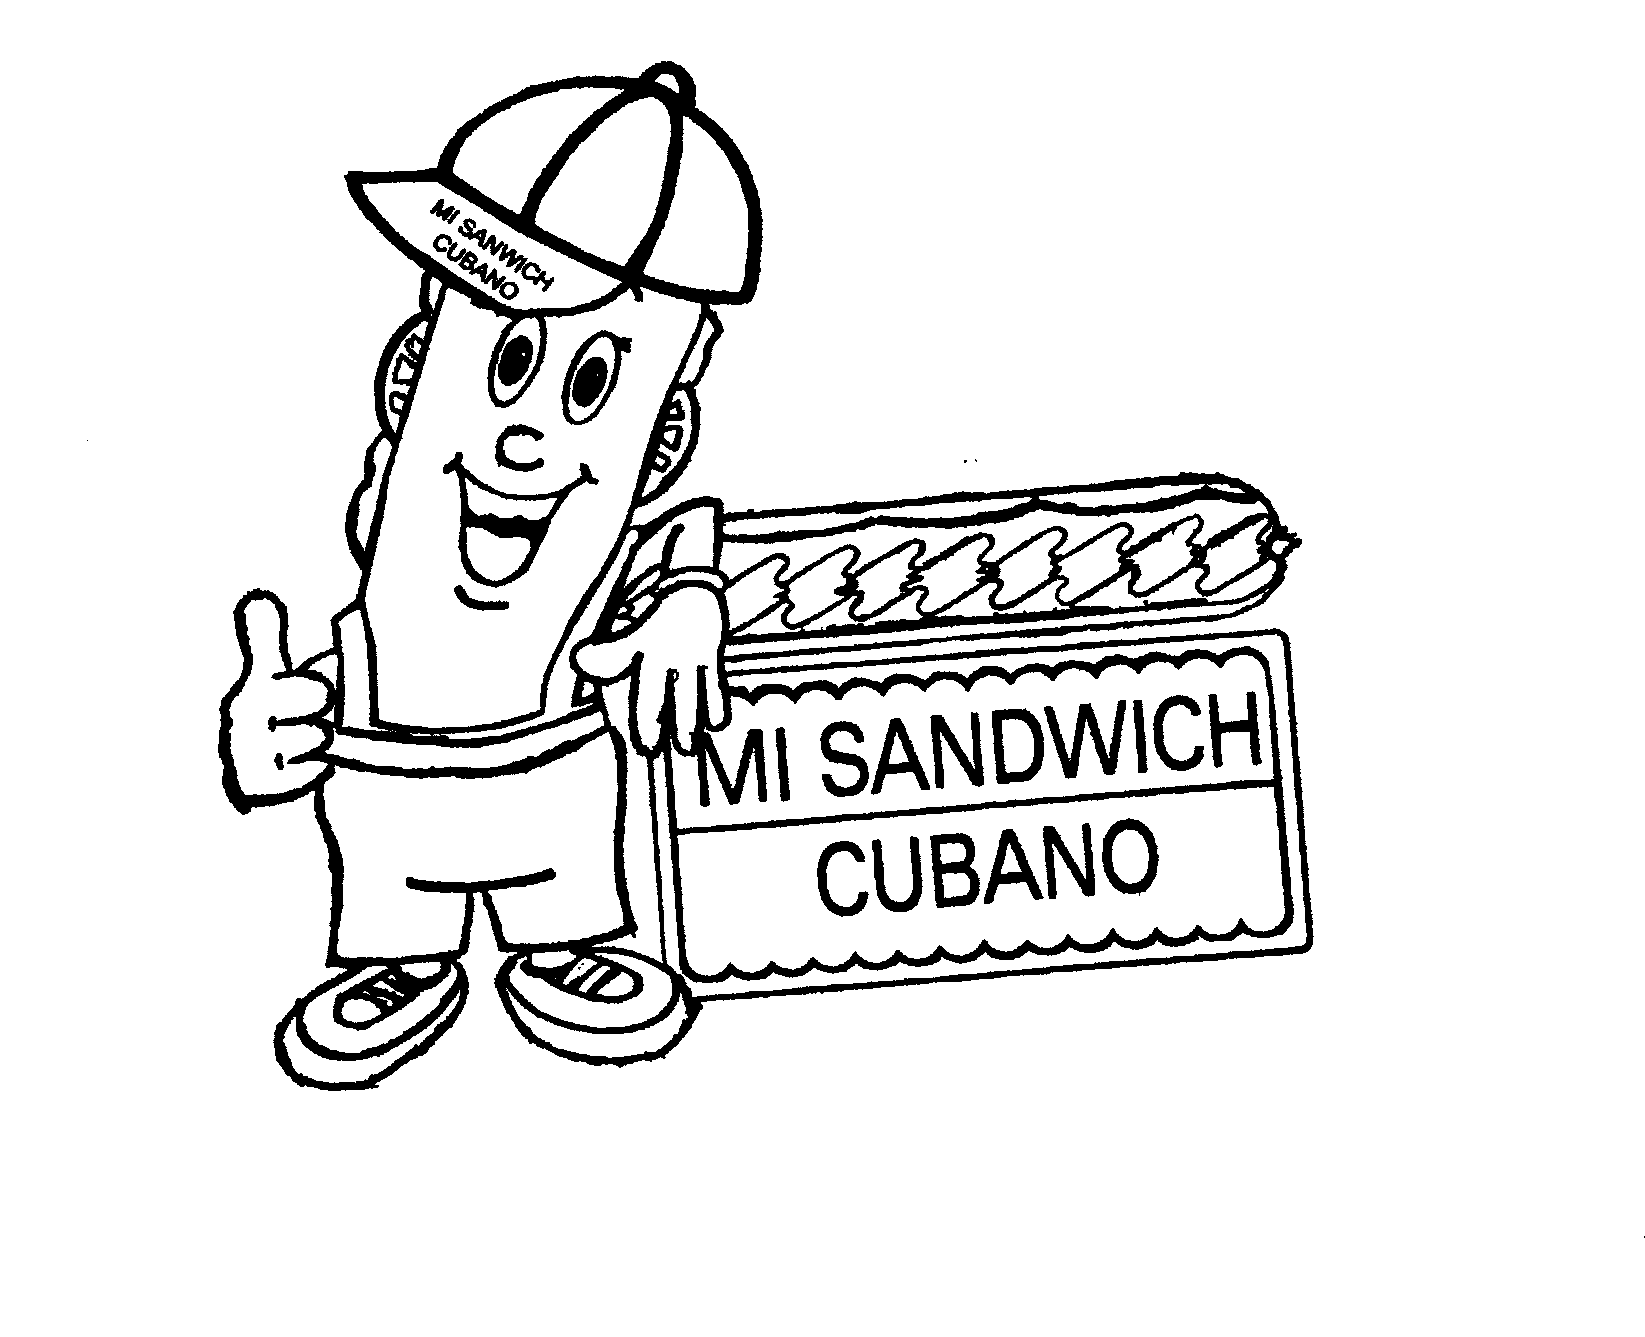 MI SANDWICH CUBANO